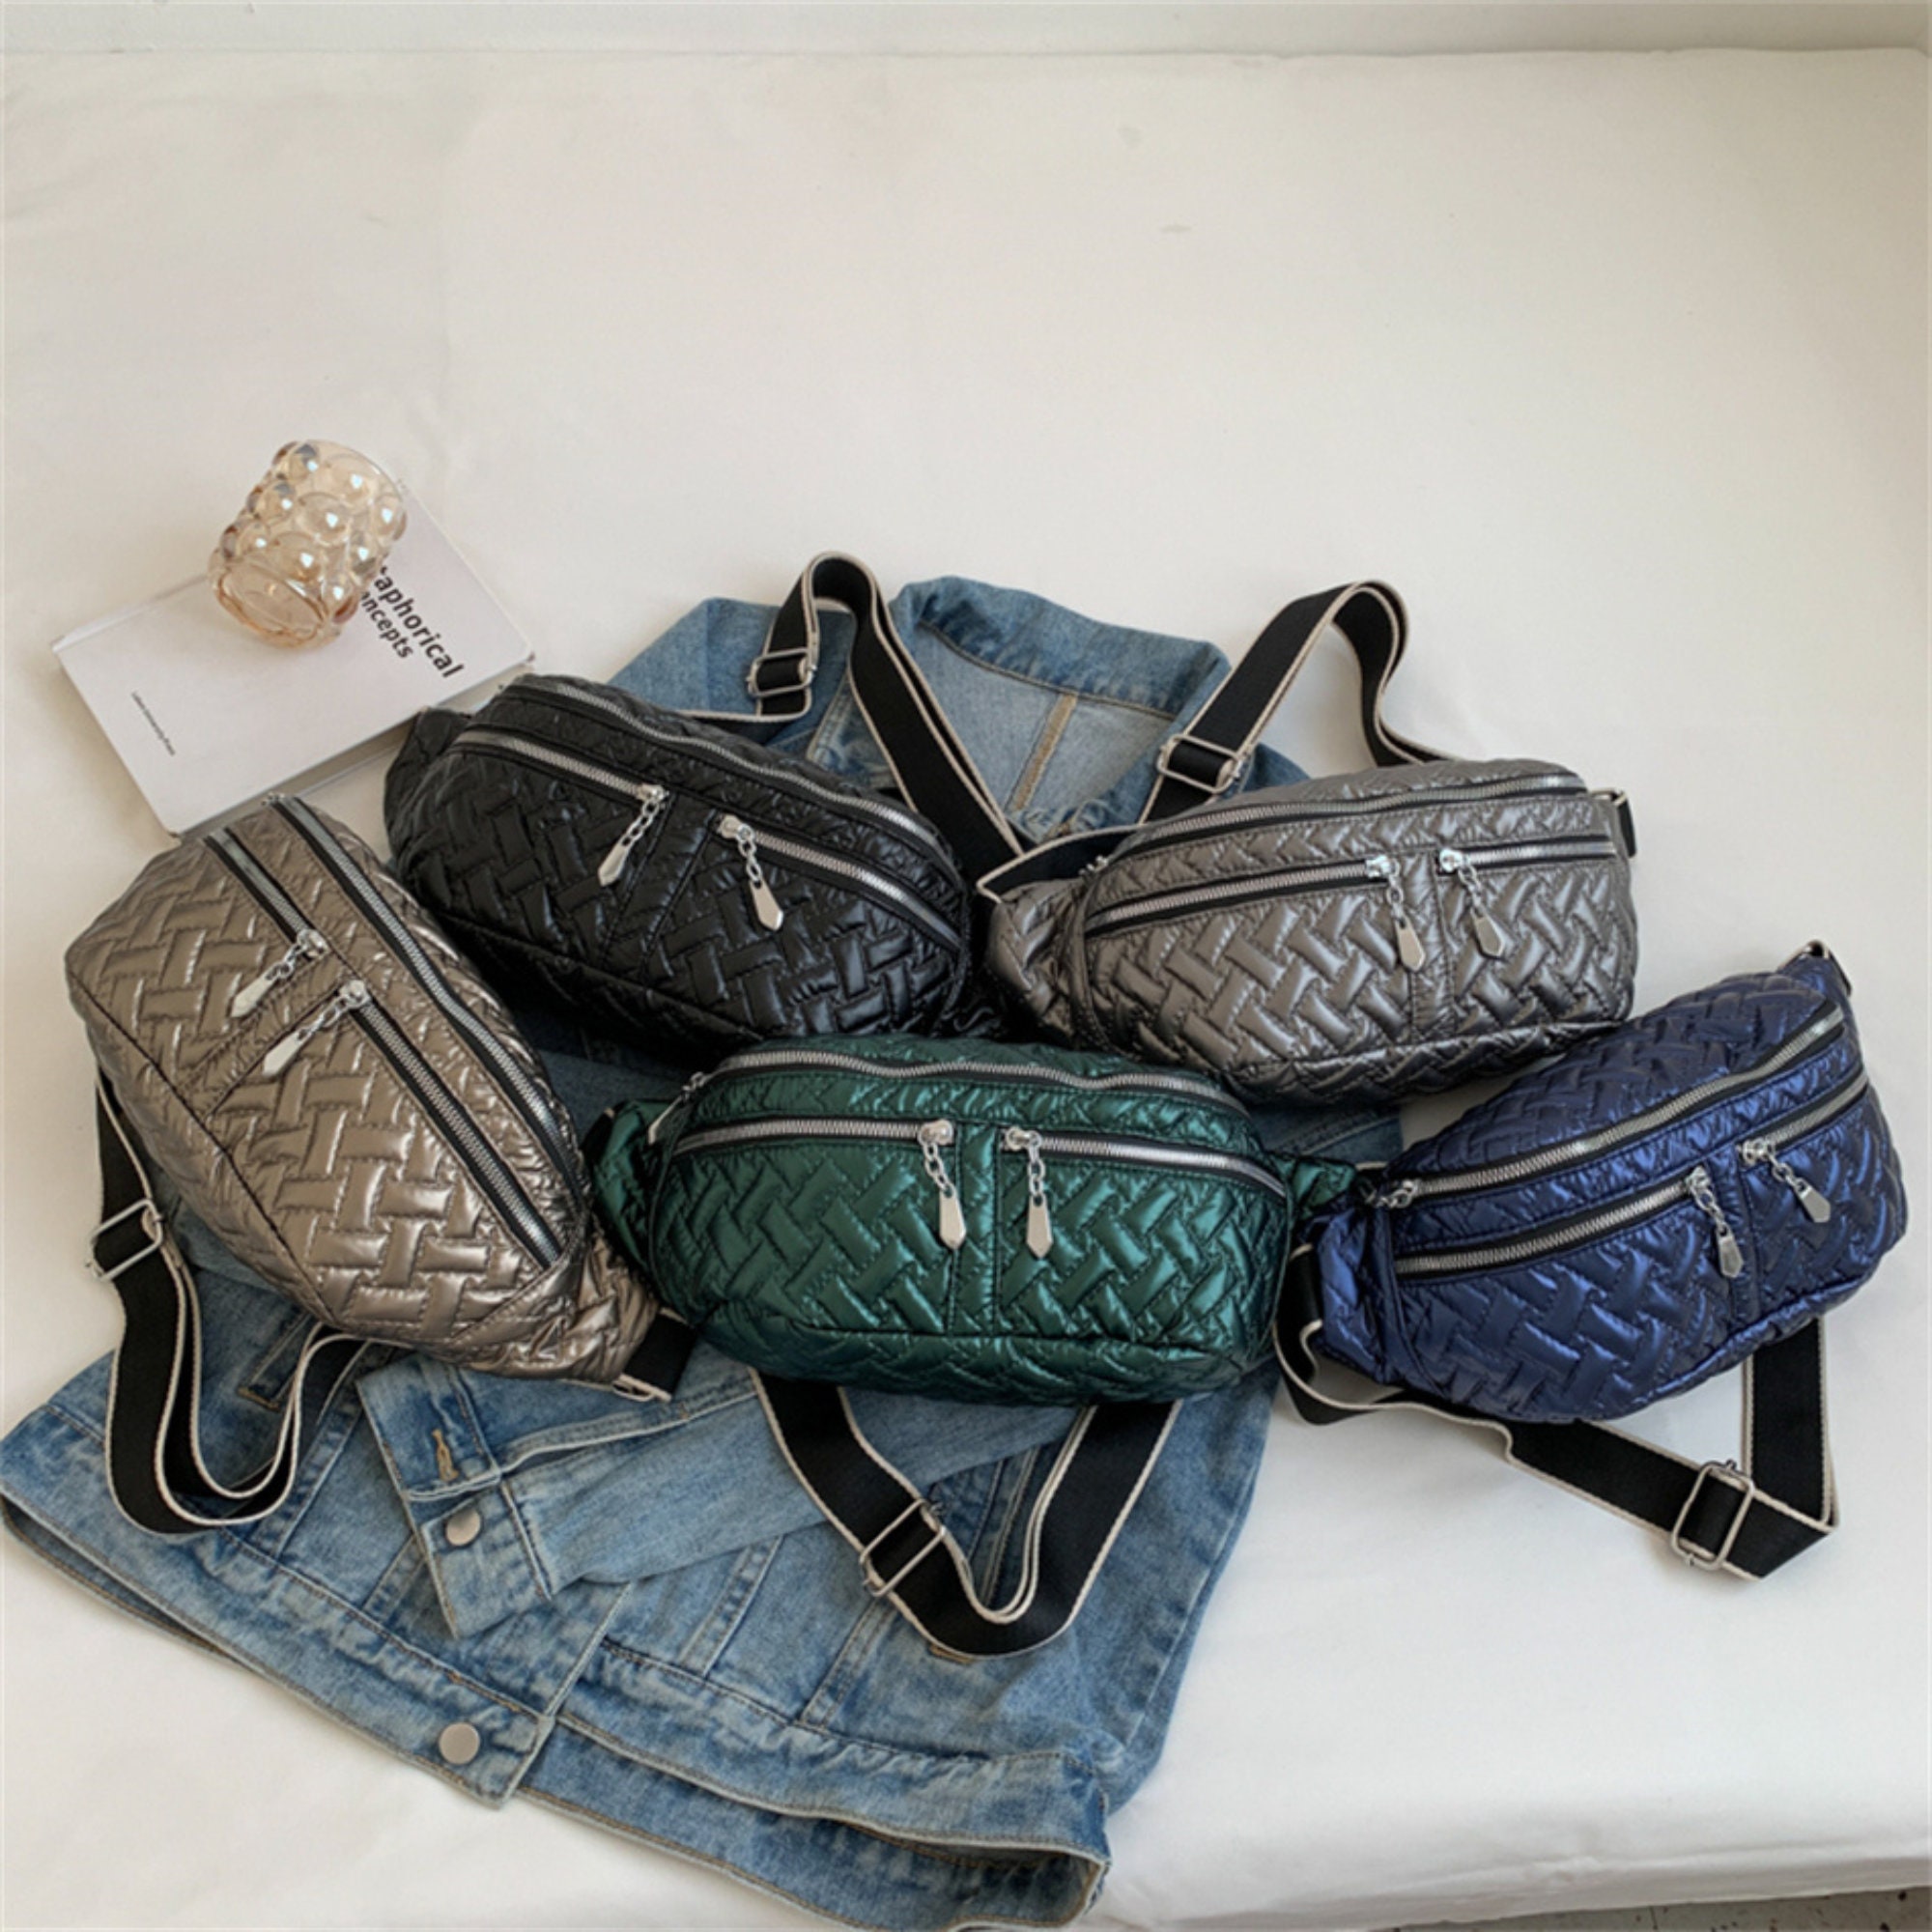 Buylor Women's Belt Bags Fashion Waist Packs Designer Bum Bag Shoulder